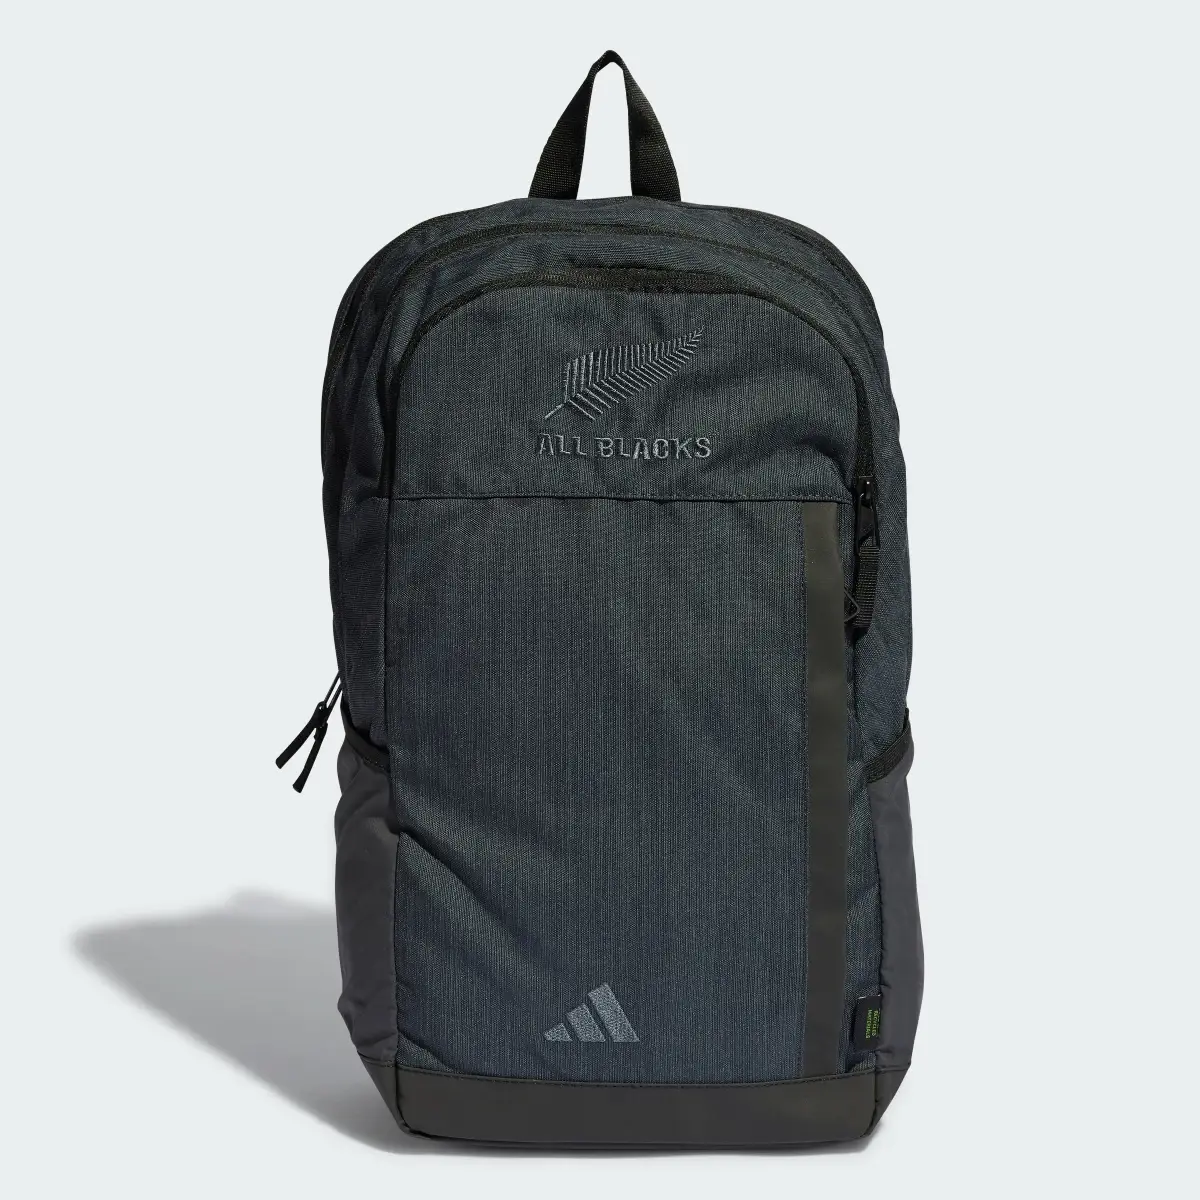 Adidas All Blacks Backpack. 2